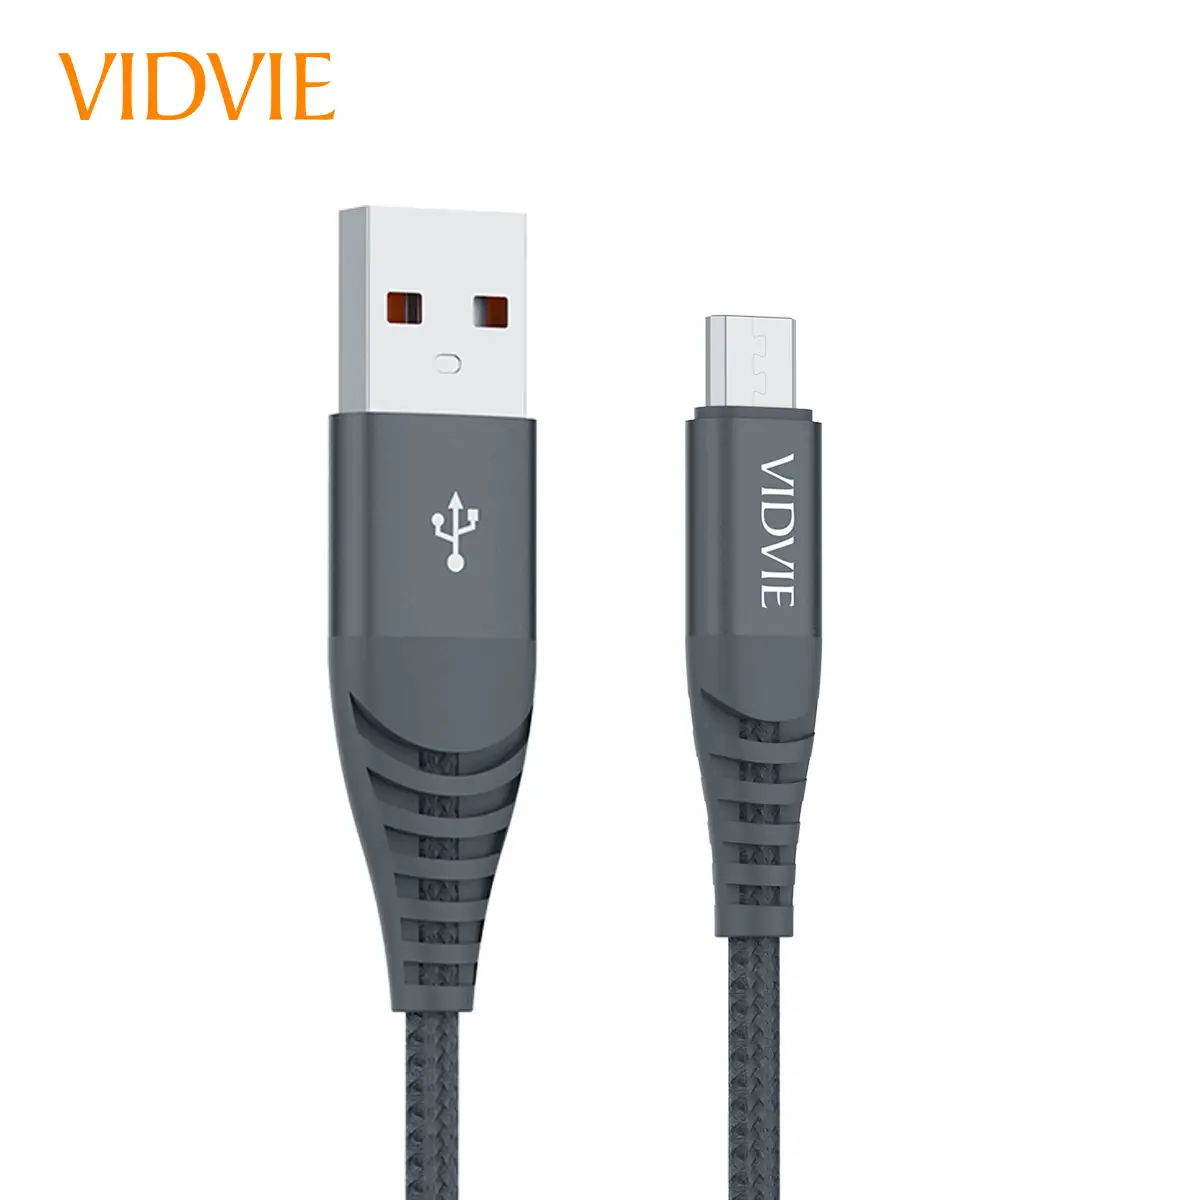 Kabel Data USB Mikro Pilihan Pabrik 2,4 A 120Cm untuk Samsung, Kabel Pengisian V8 Anyaman Kepang untuk Ponsel MP3 MP4, VIDVIE CB491v